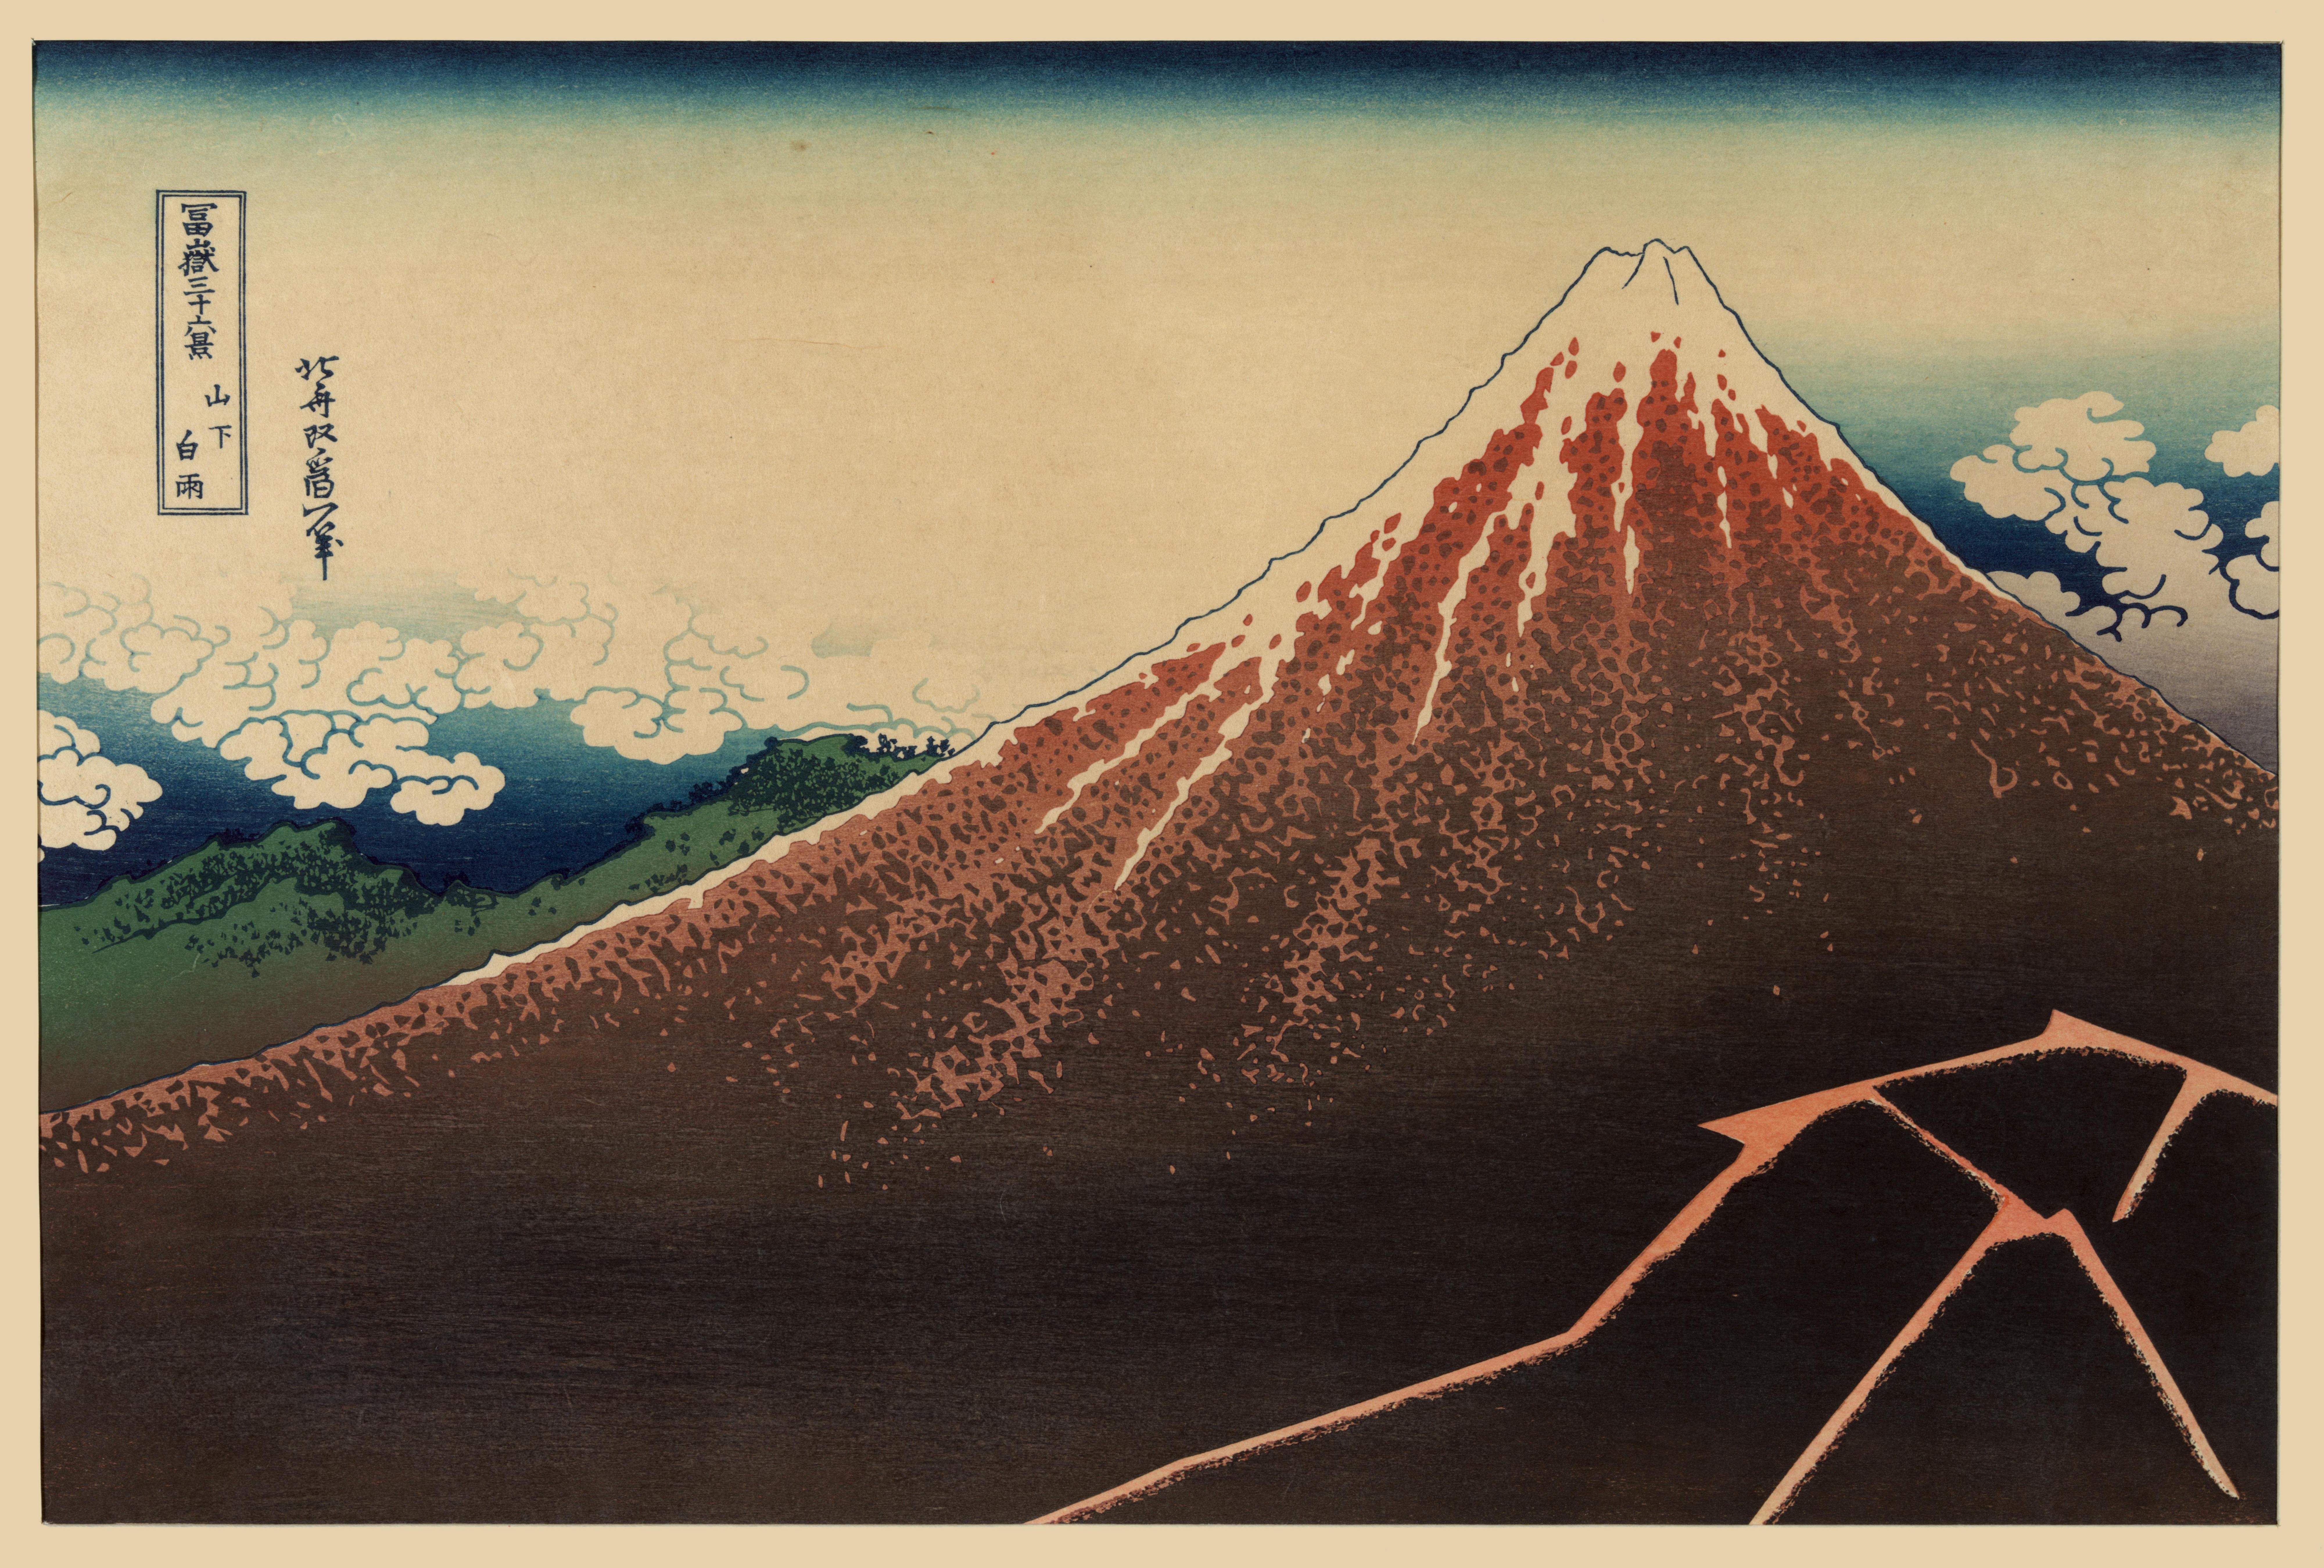 Katsushika Hokusai. Storm below Mount Fuji, from the series Thirty-six Views of Mount Fuji